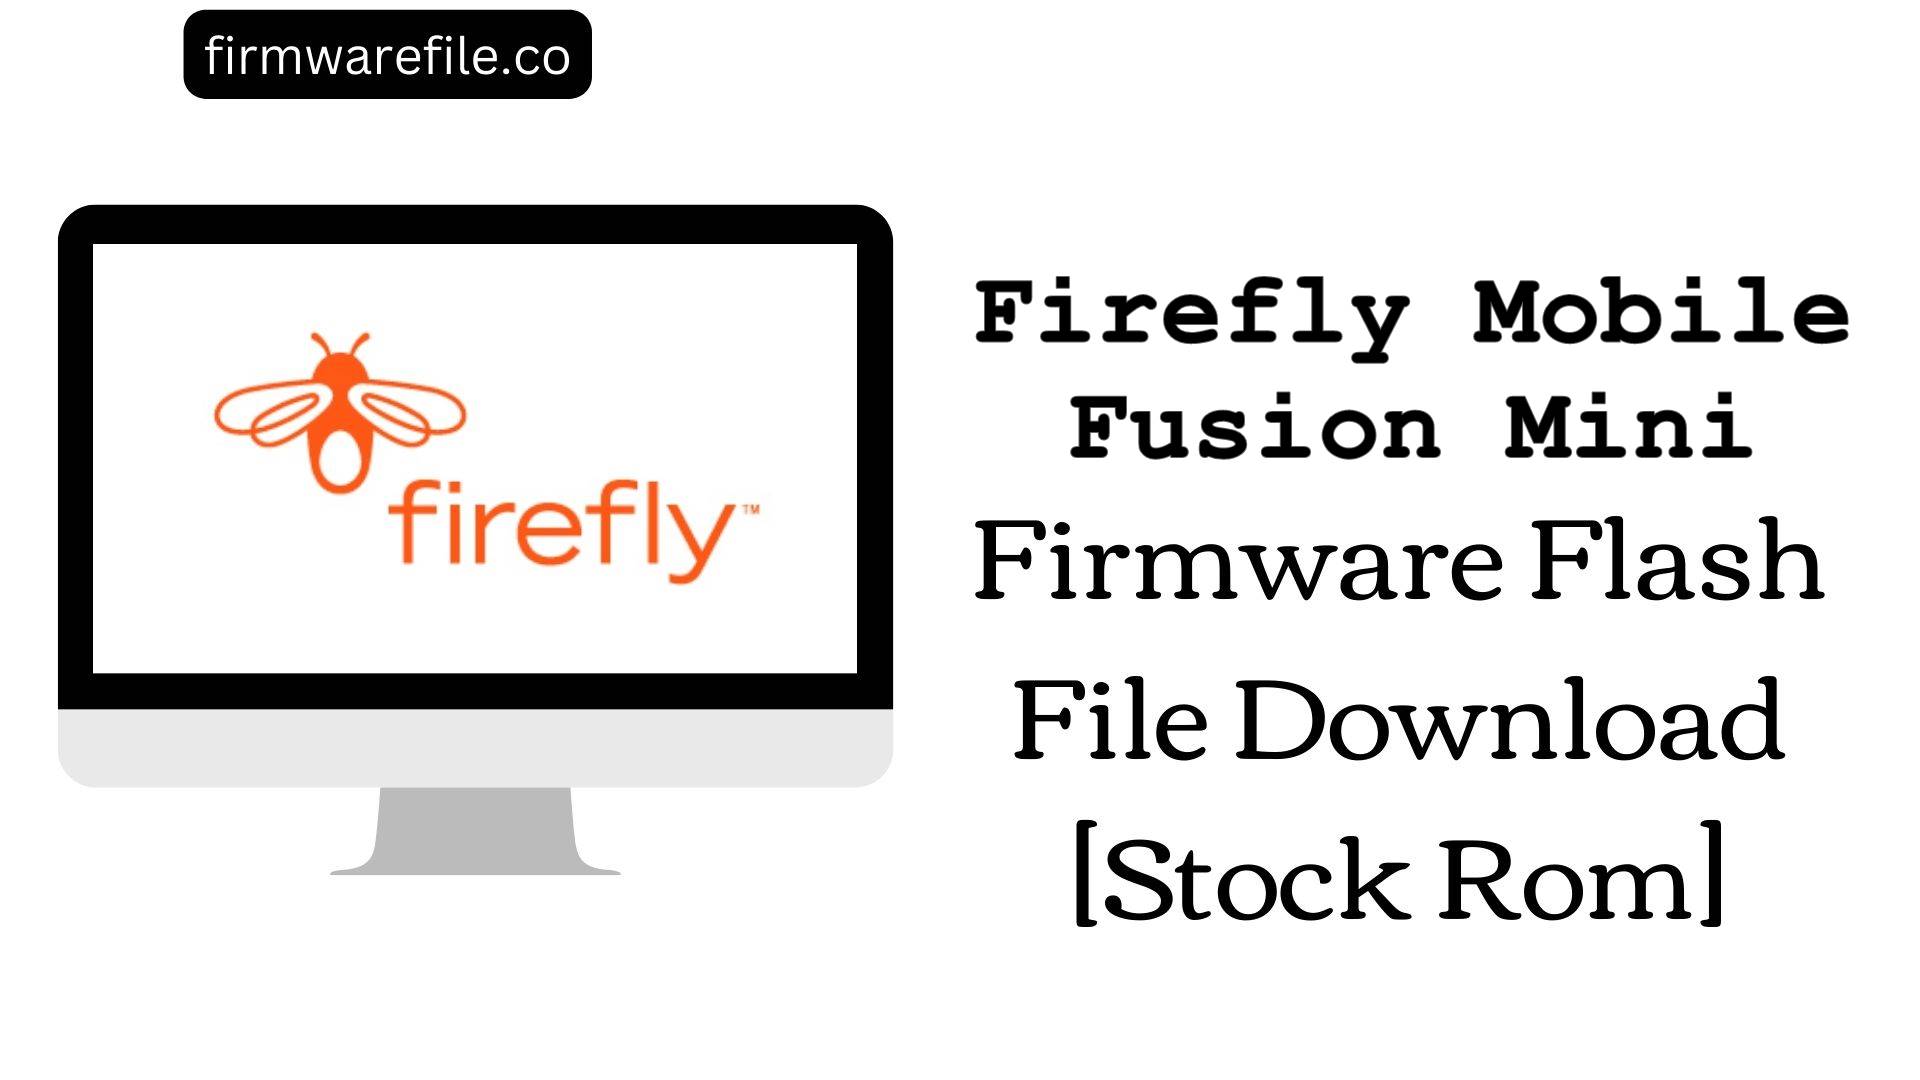 Firefly Mobile Fusion Mini